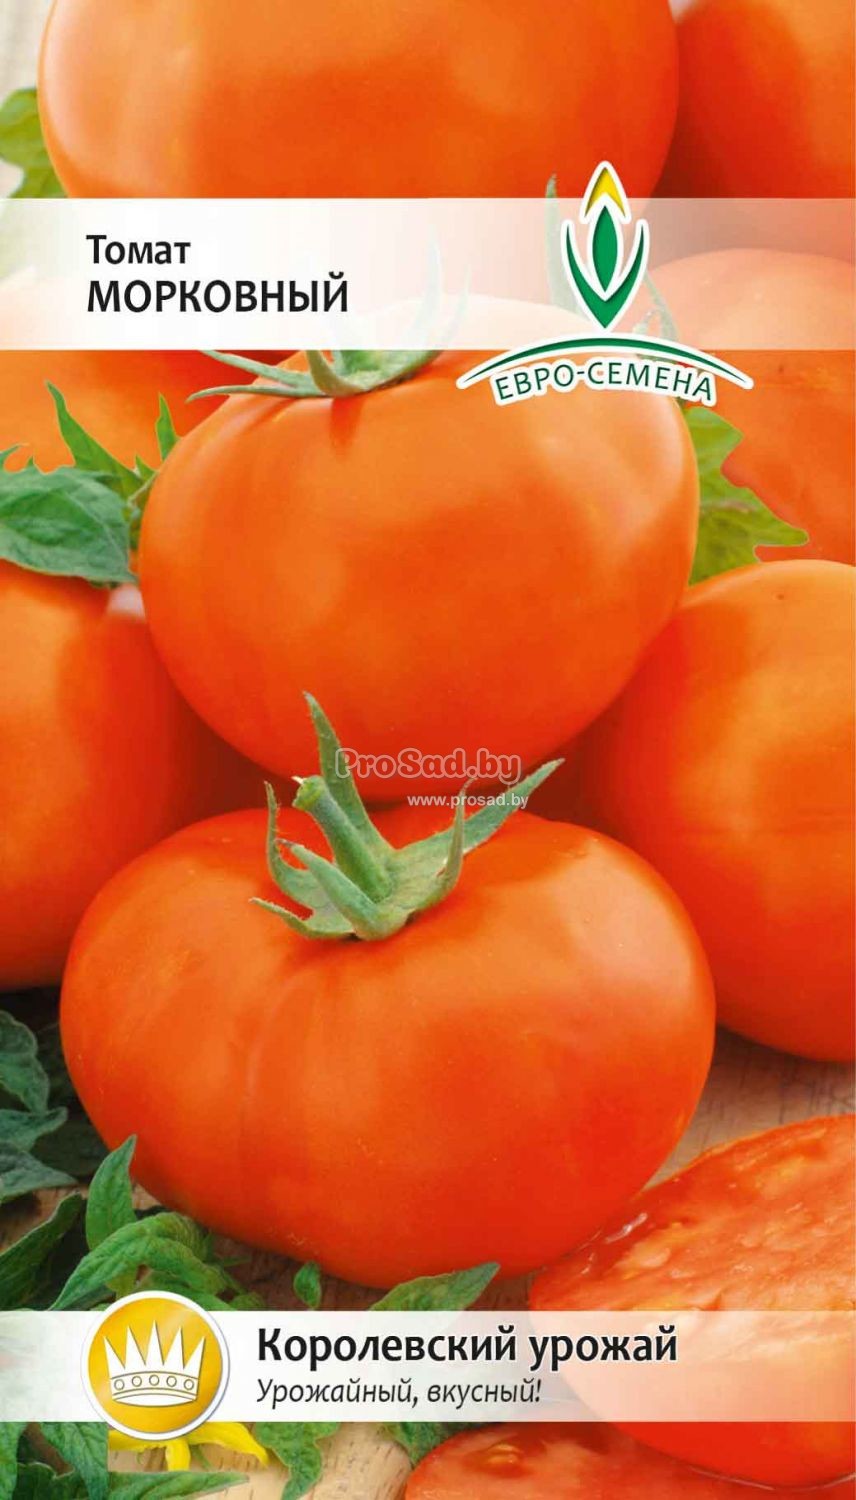 Описание и характеристика томата Морковный, отзывы, фото